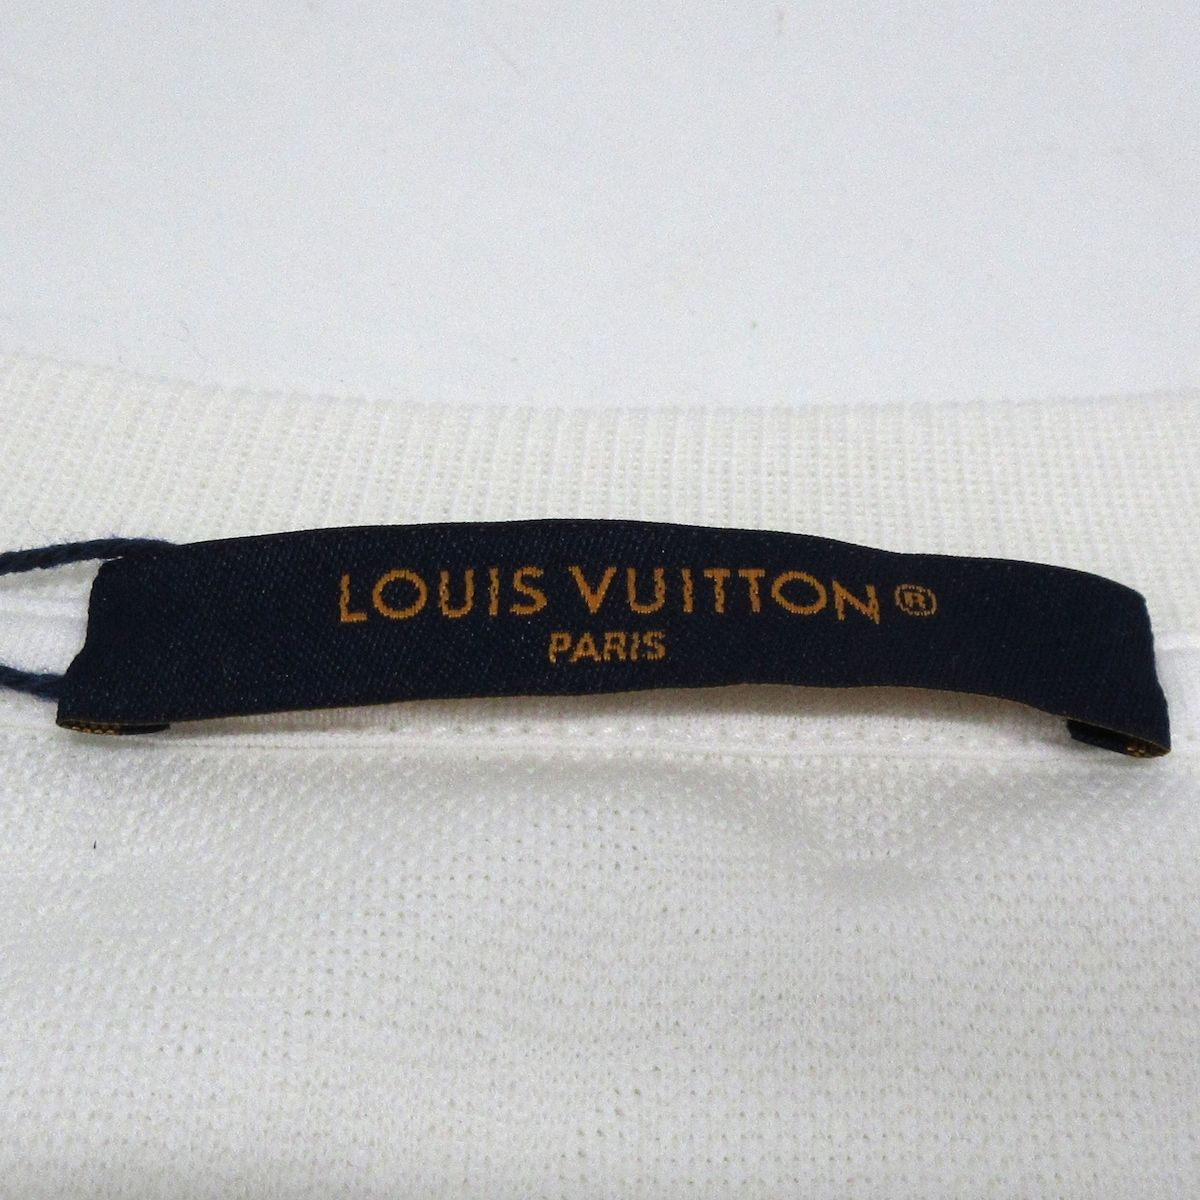 LOUIS VUITTON(ルイヴィトン) 半袖Tシャツ サイズL - RM241MQ TCL ...